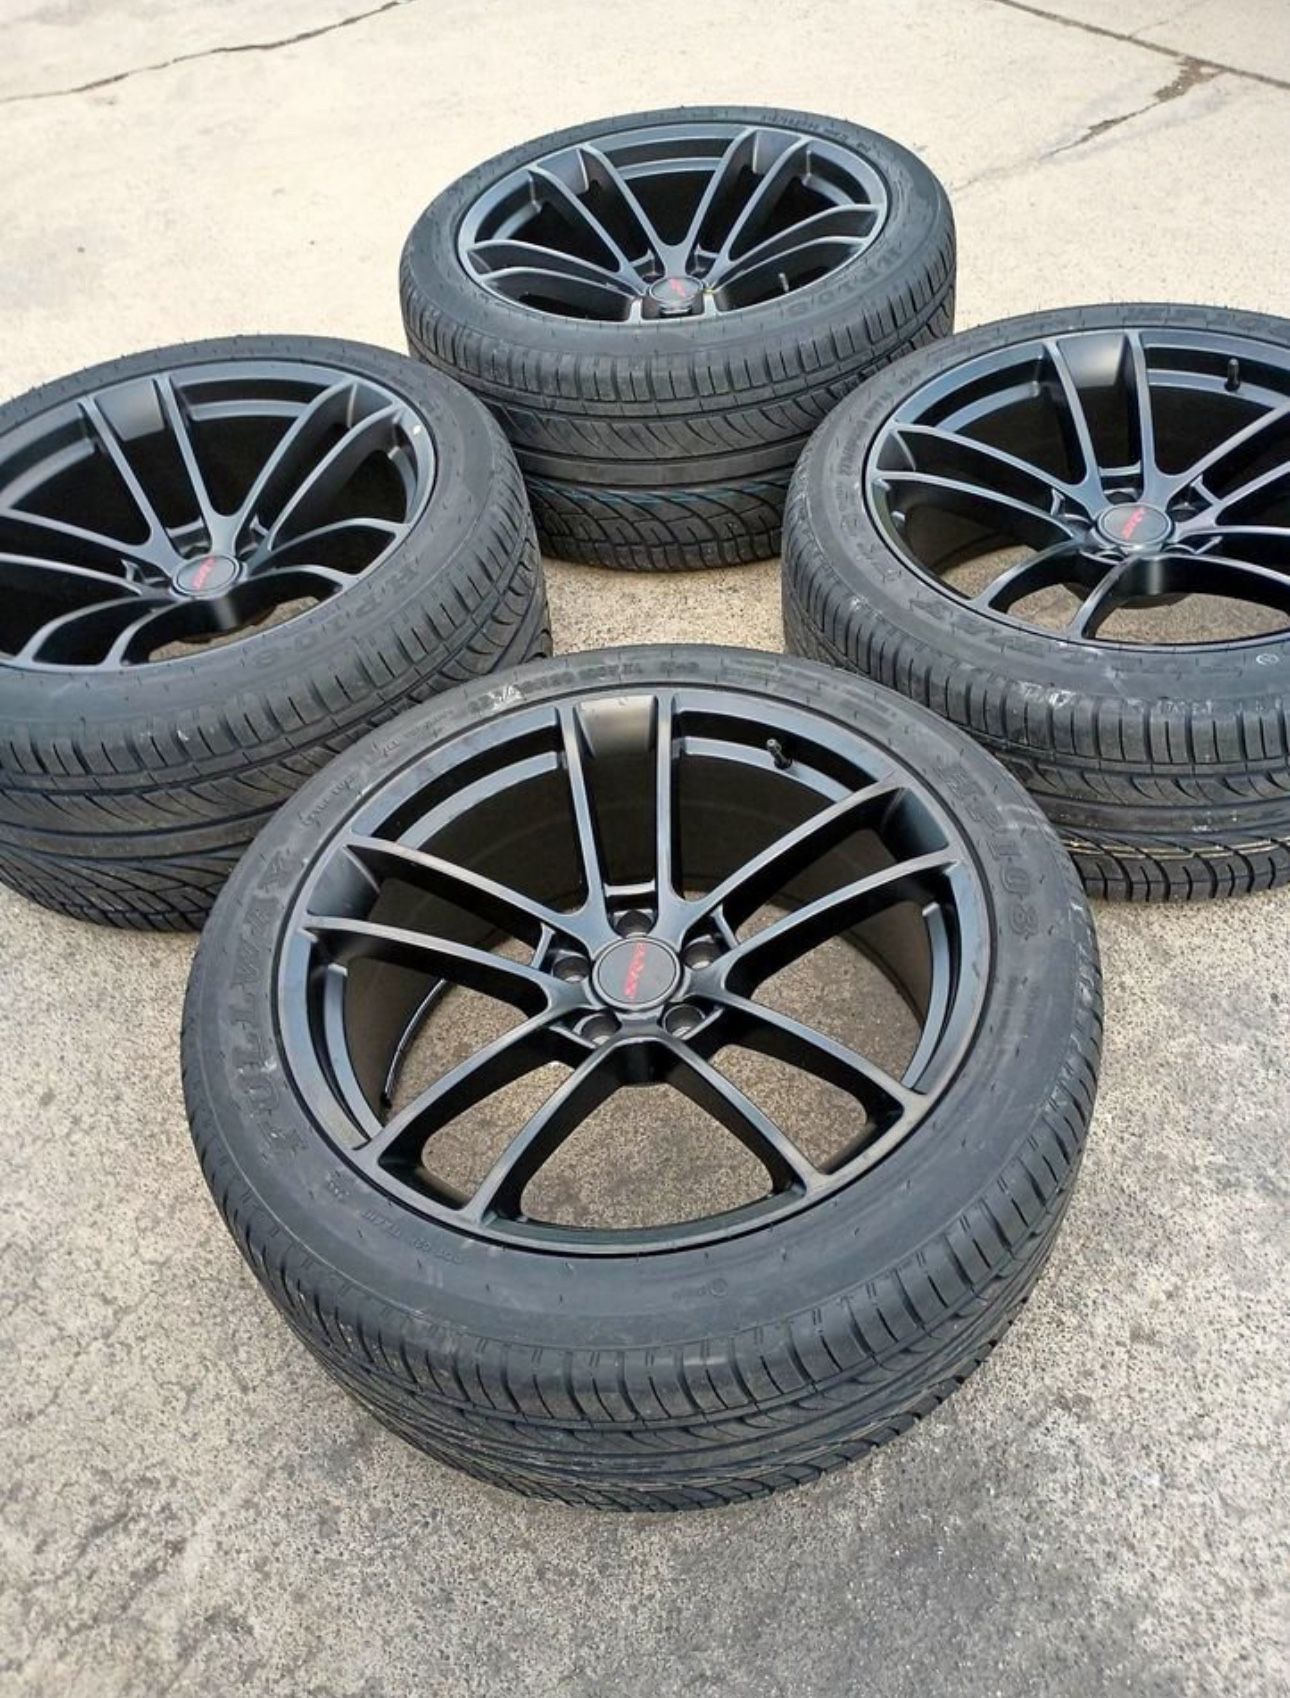 20x9.5 20x11 SRT Hellcat Matte Black Wheels 5x115 Charger Challenger Chrysler 300 Wheels and Tires